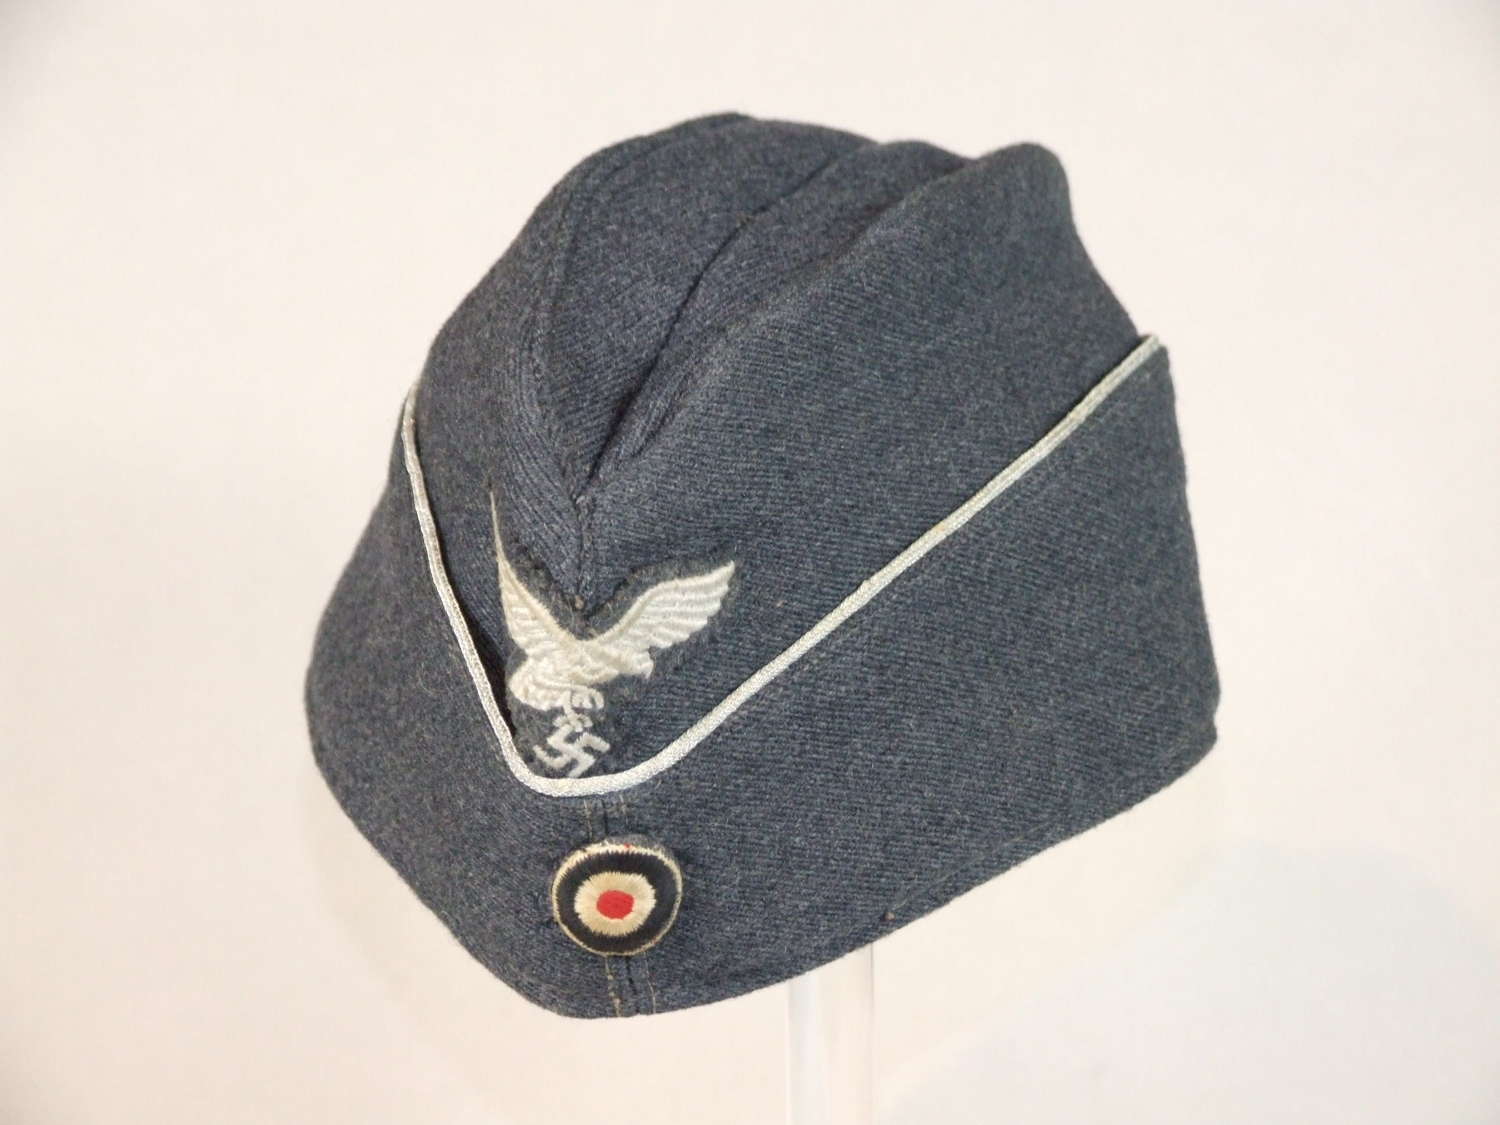 Luftwaffe Officer's Side Cap (Fliegermutzer)